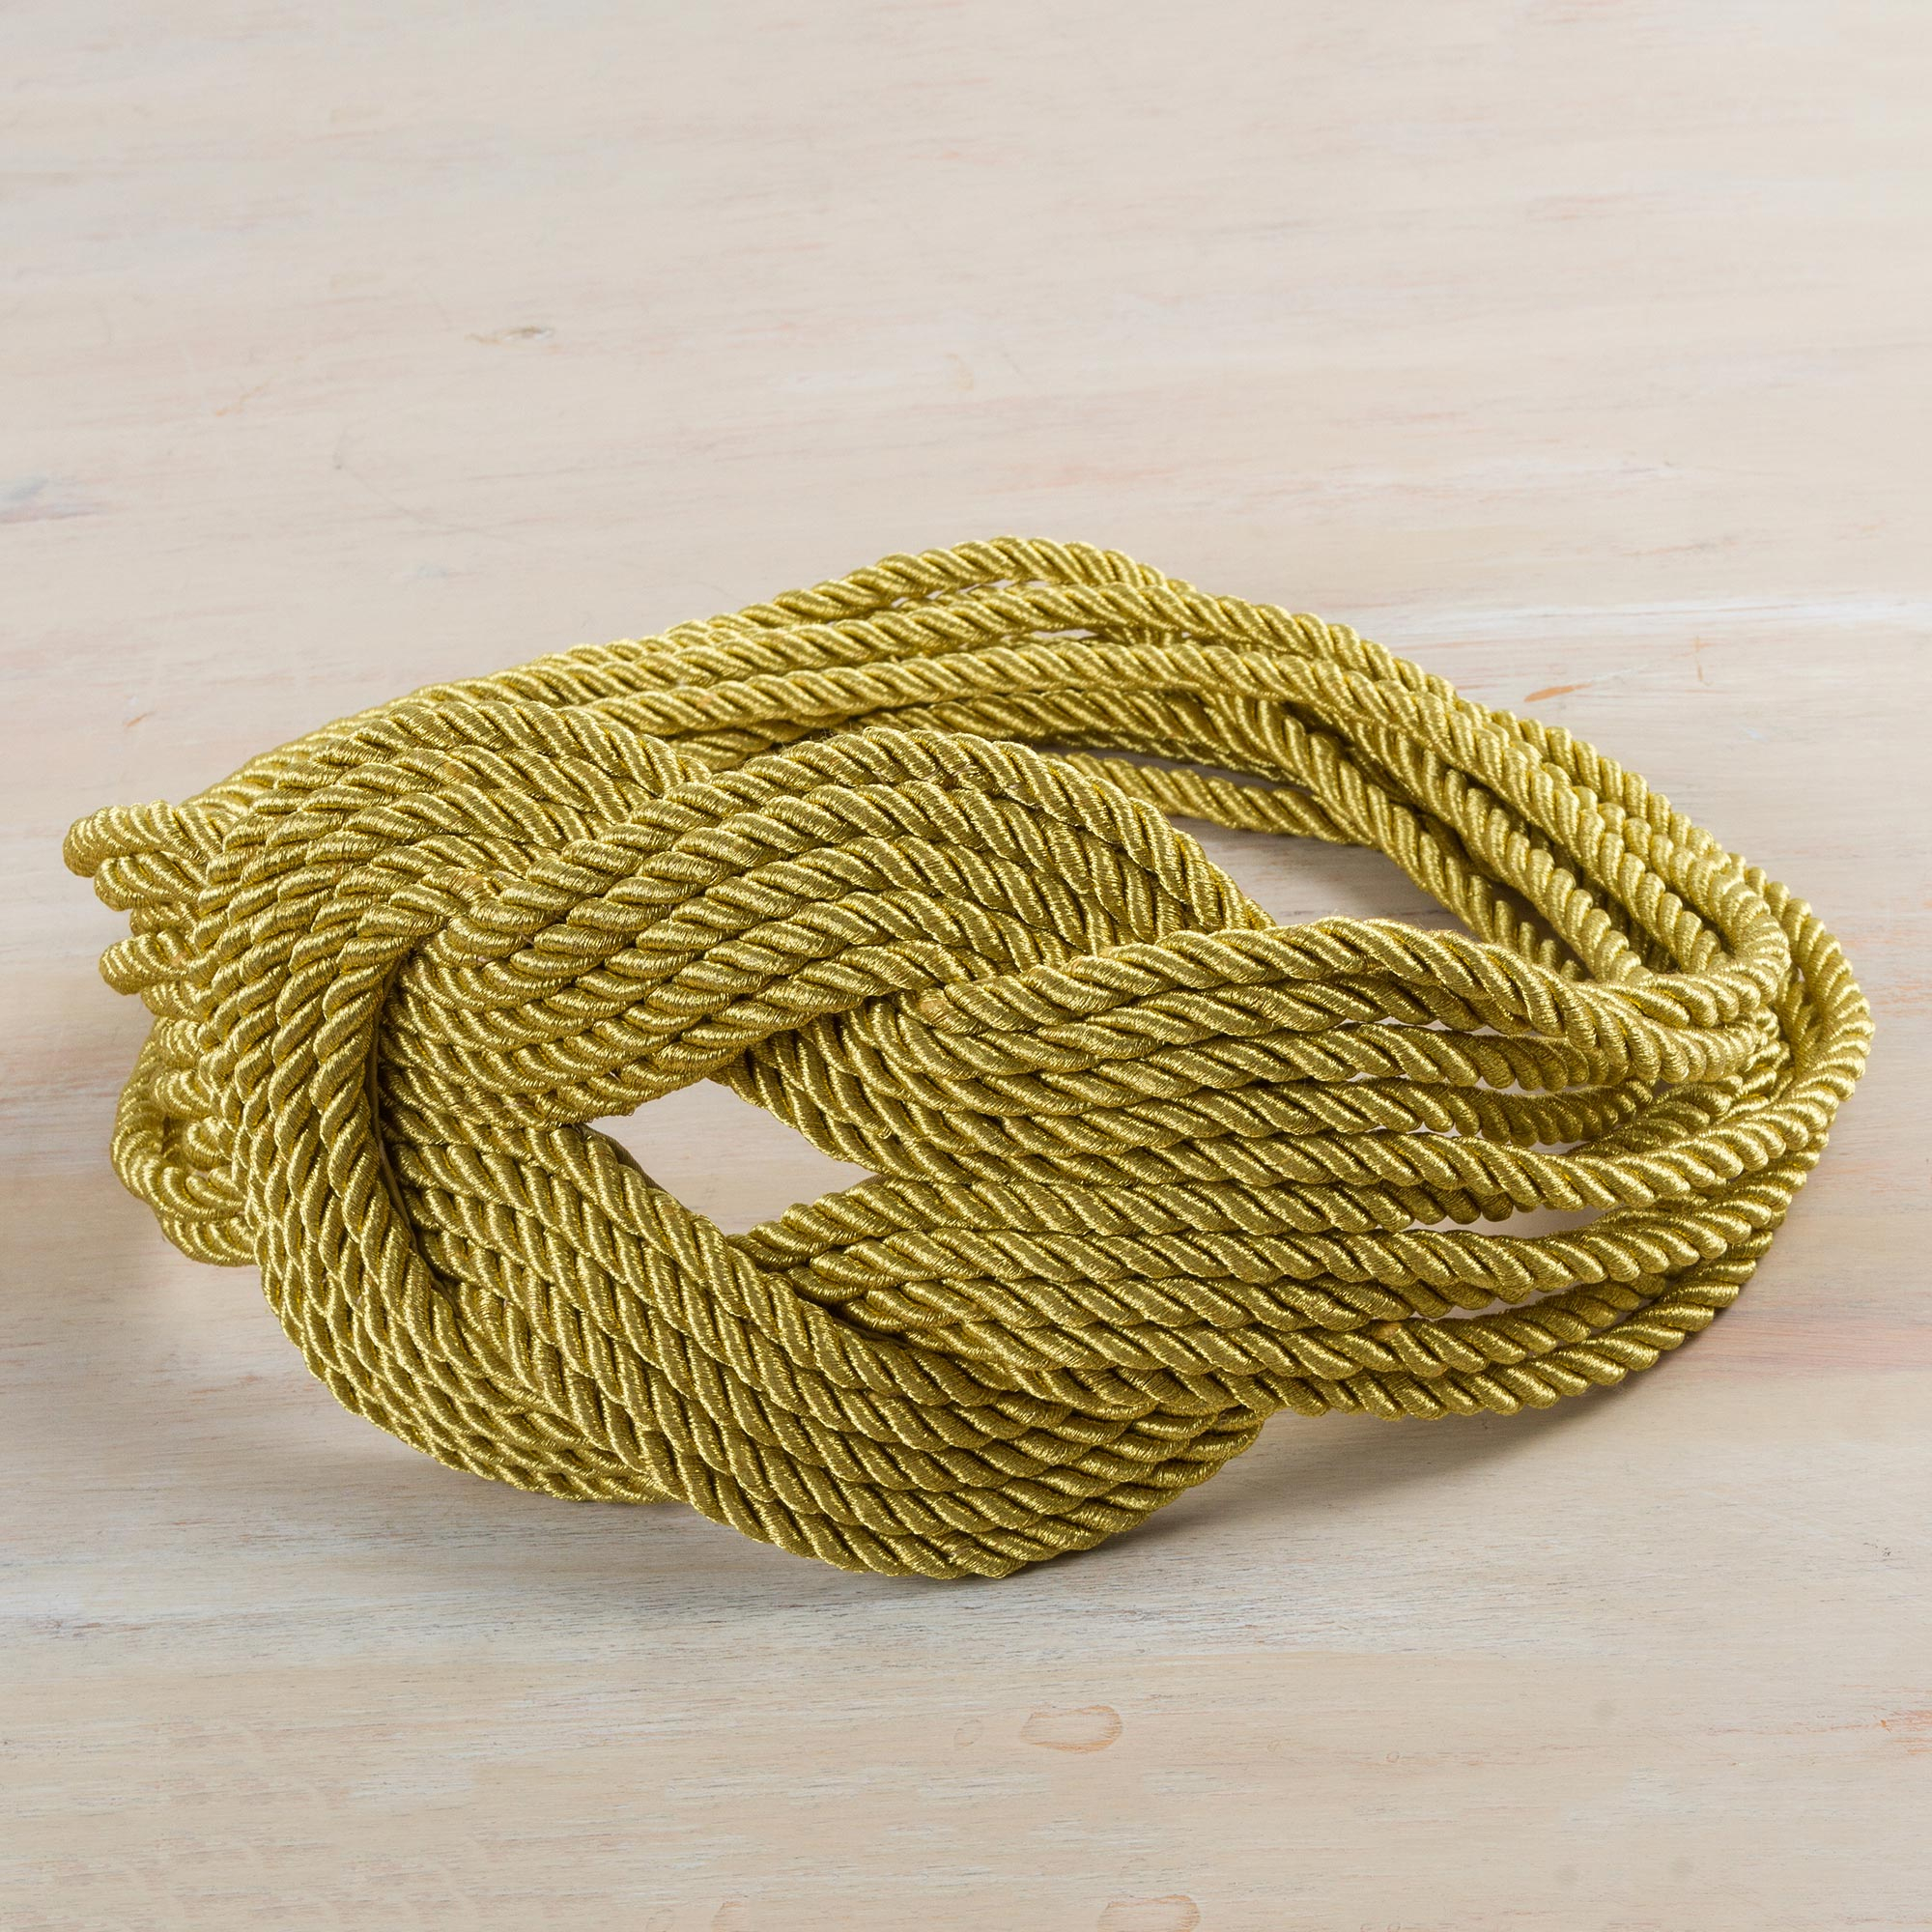 Made Modern Rope Belt in Gold Color 